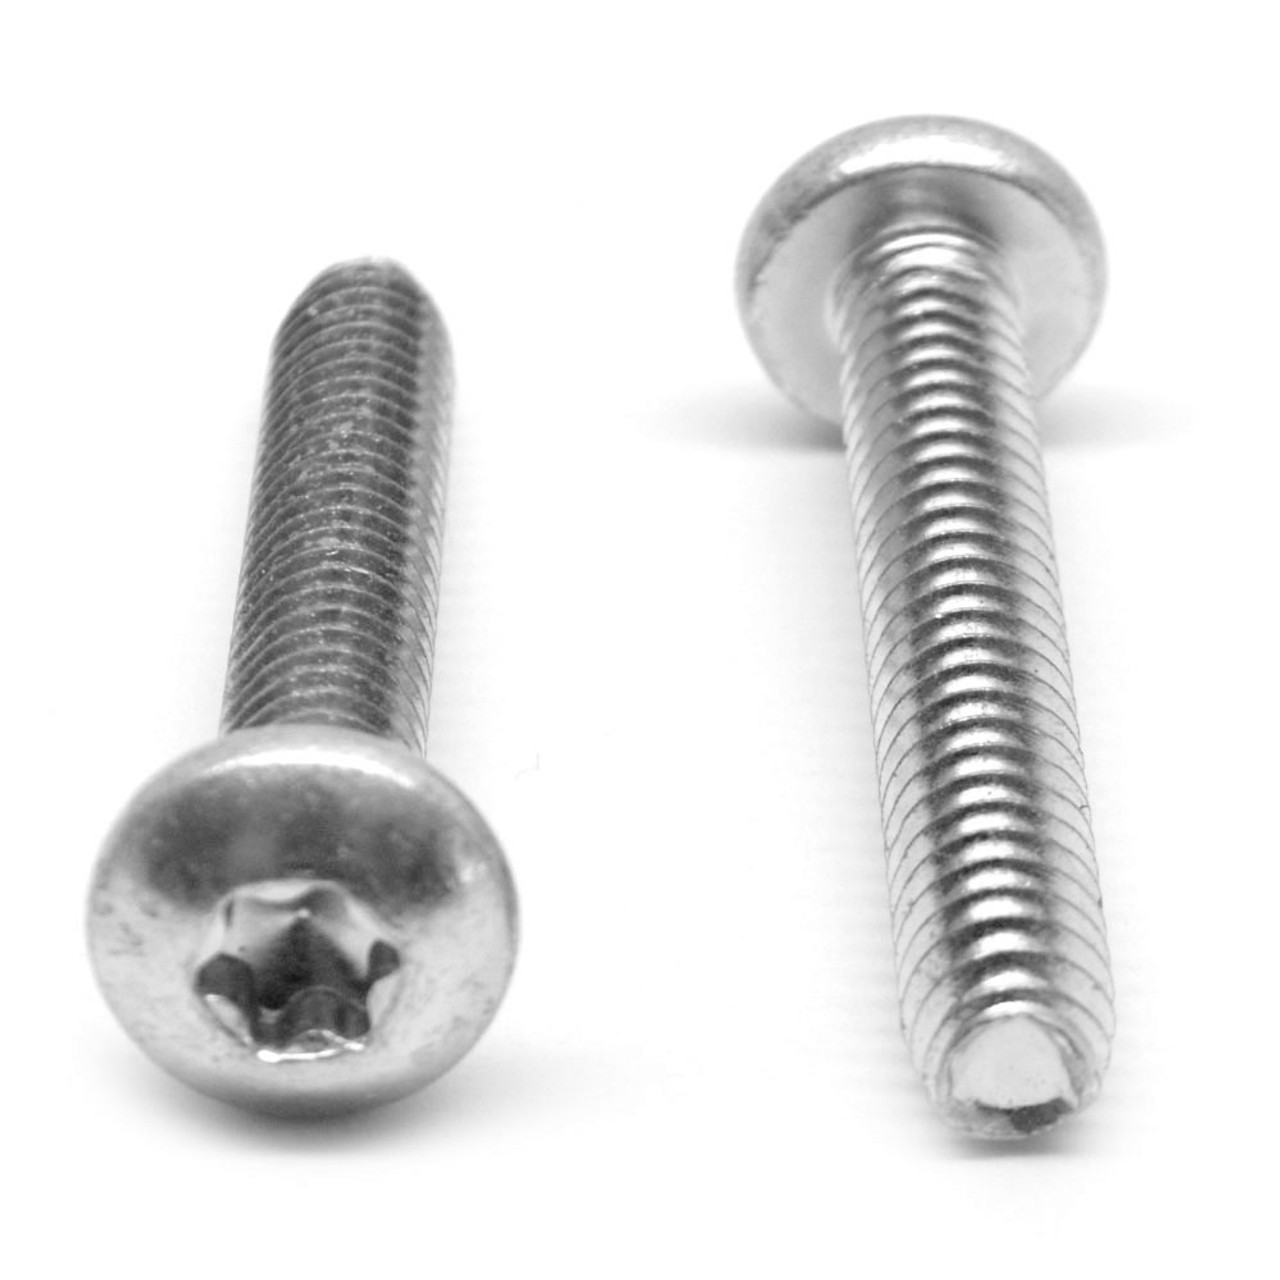 #10-24 x 1" (FT) Coarse Thread Taptite?-Alternative Thread Rolling Screw 6 Lobe Pan Head Stainless Steel 18-8 Wax